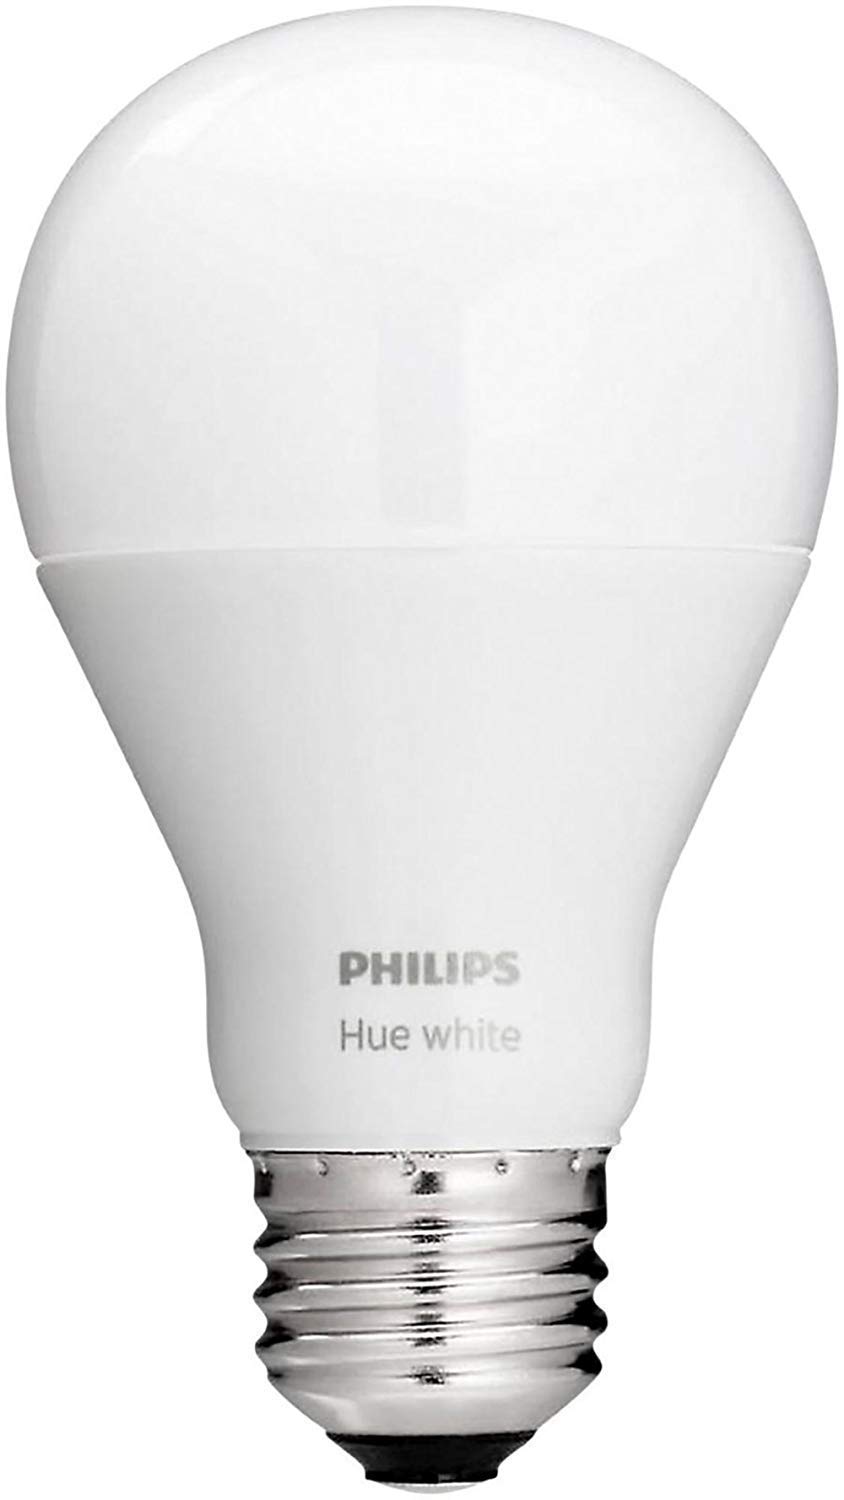 1585352961 771 The best smart bulbs of 2020